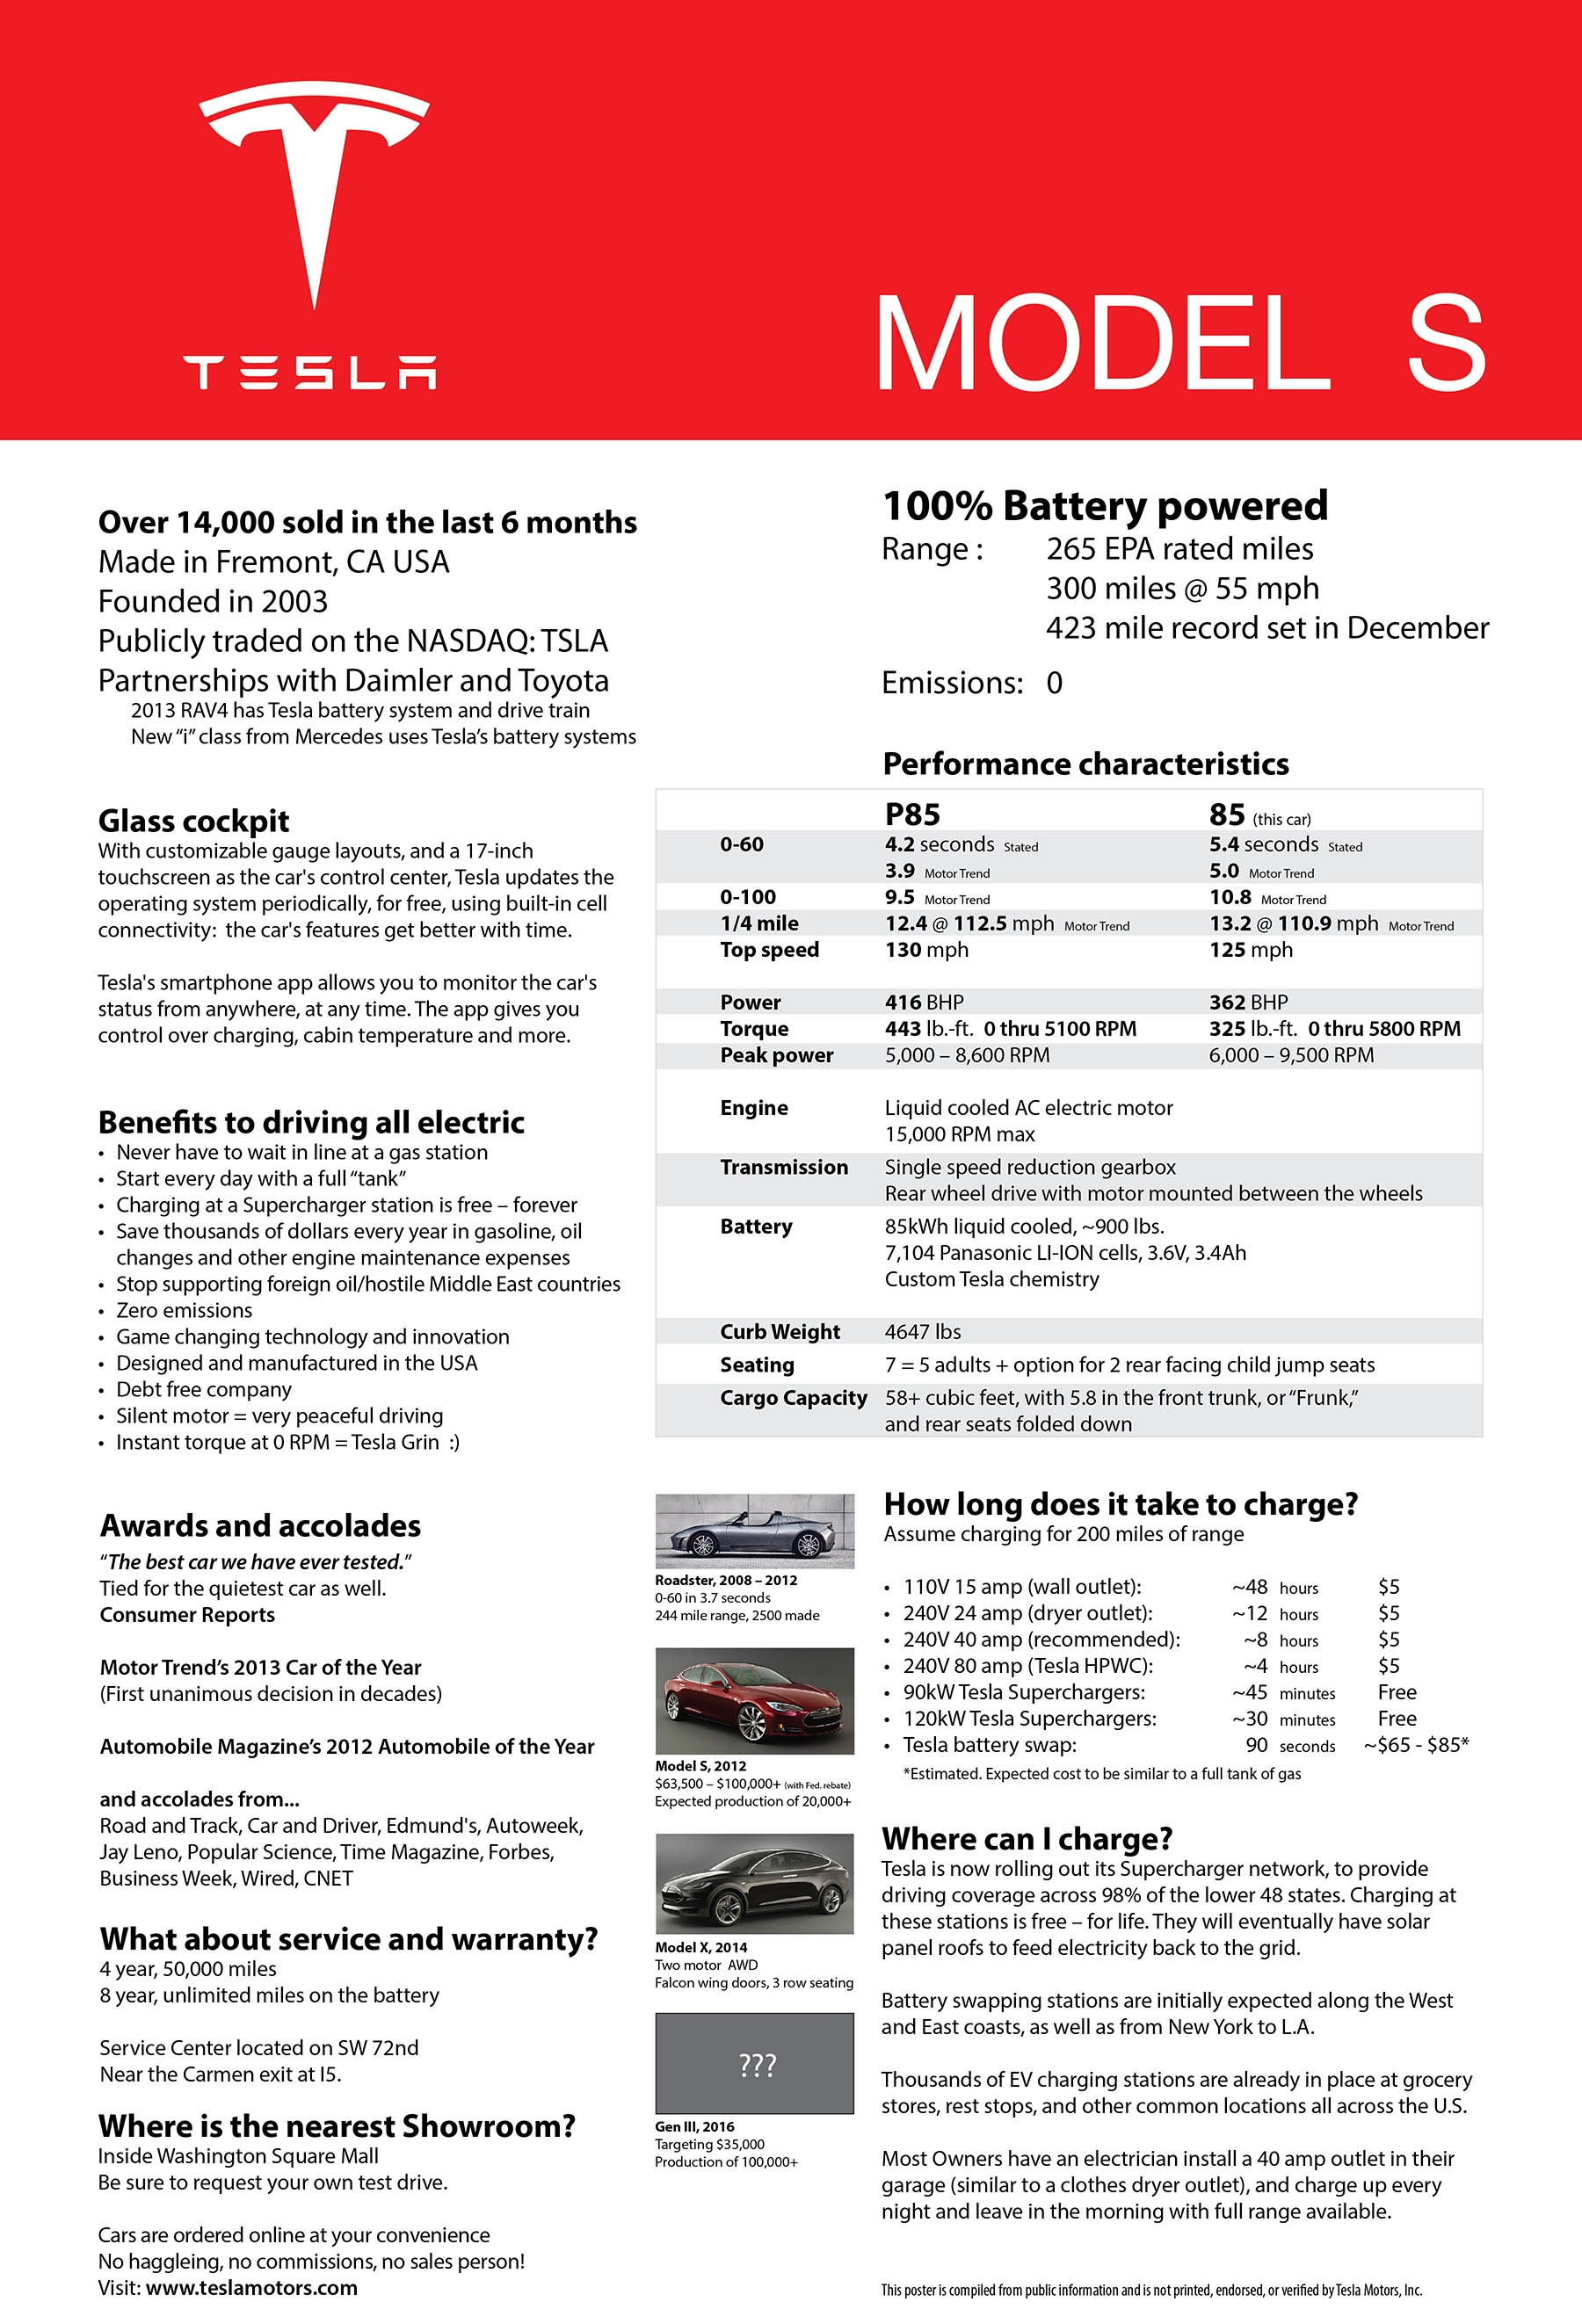 Tesla-Model-S-car-show-poster-v3.jpg